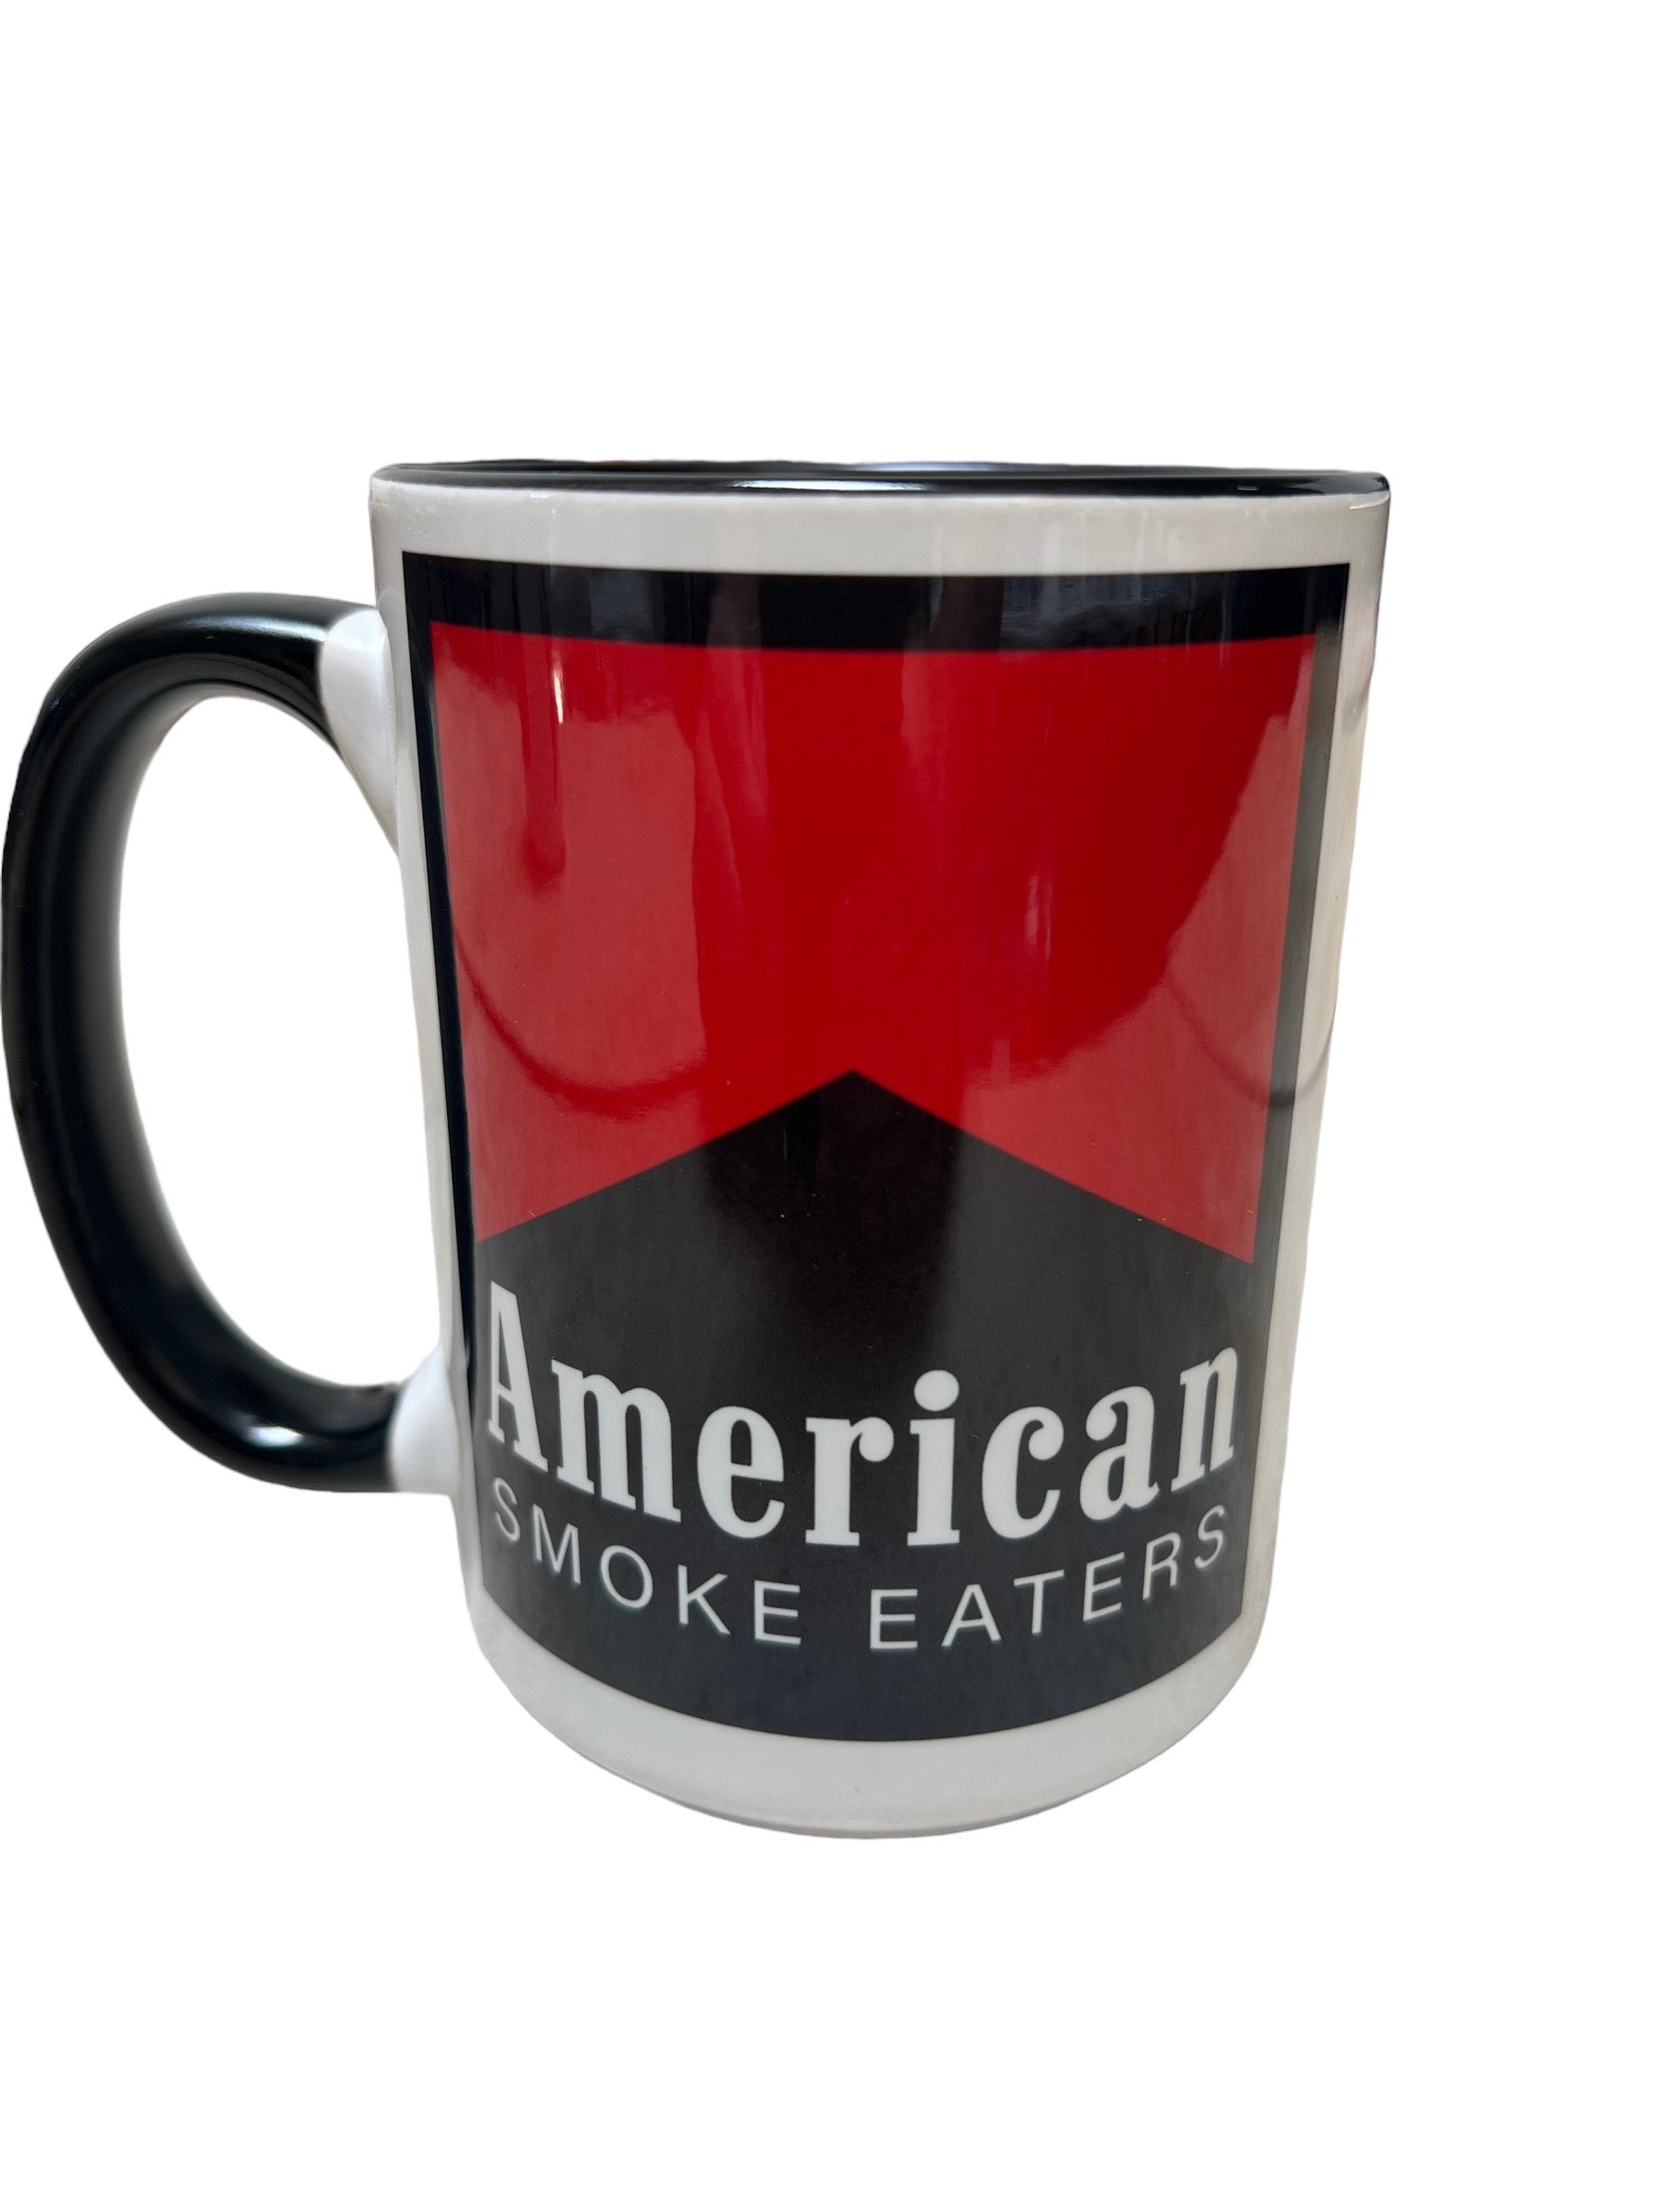 American Smoke Eaters Mug